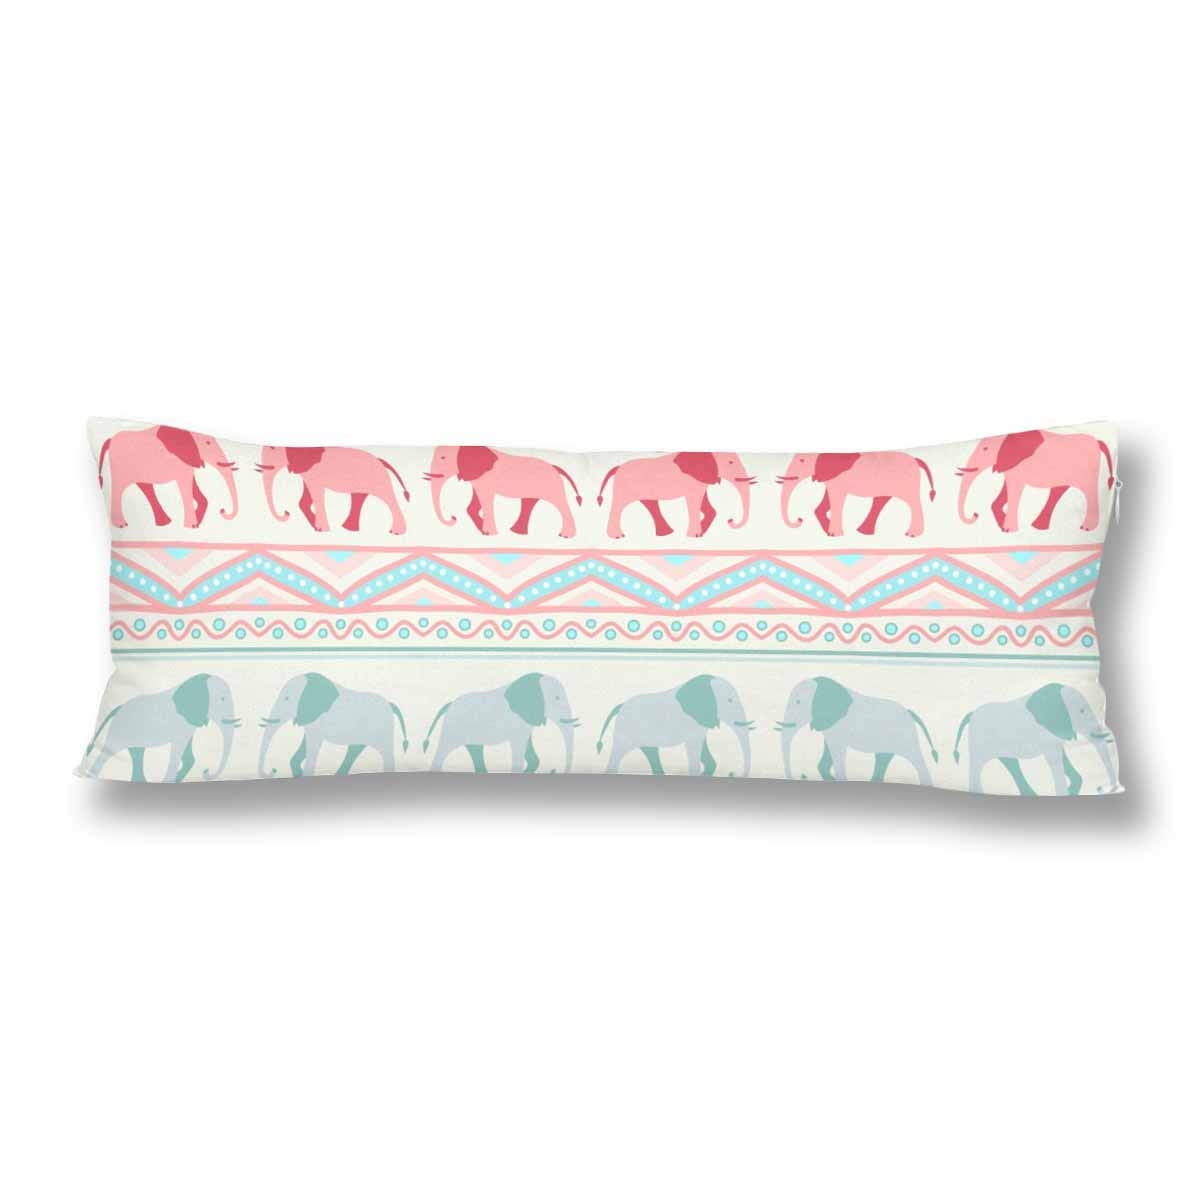 Gckg Animal Retro Cute Elephant Silhouettes Body Pillow Covers